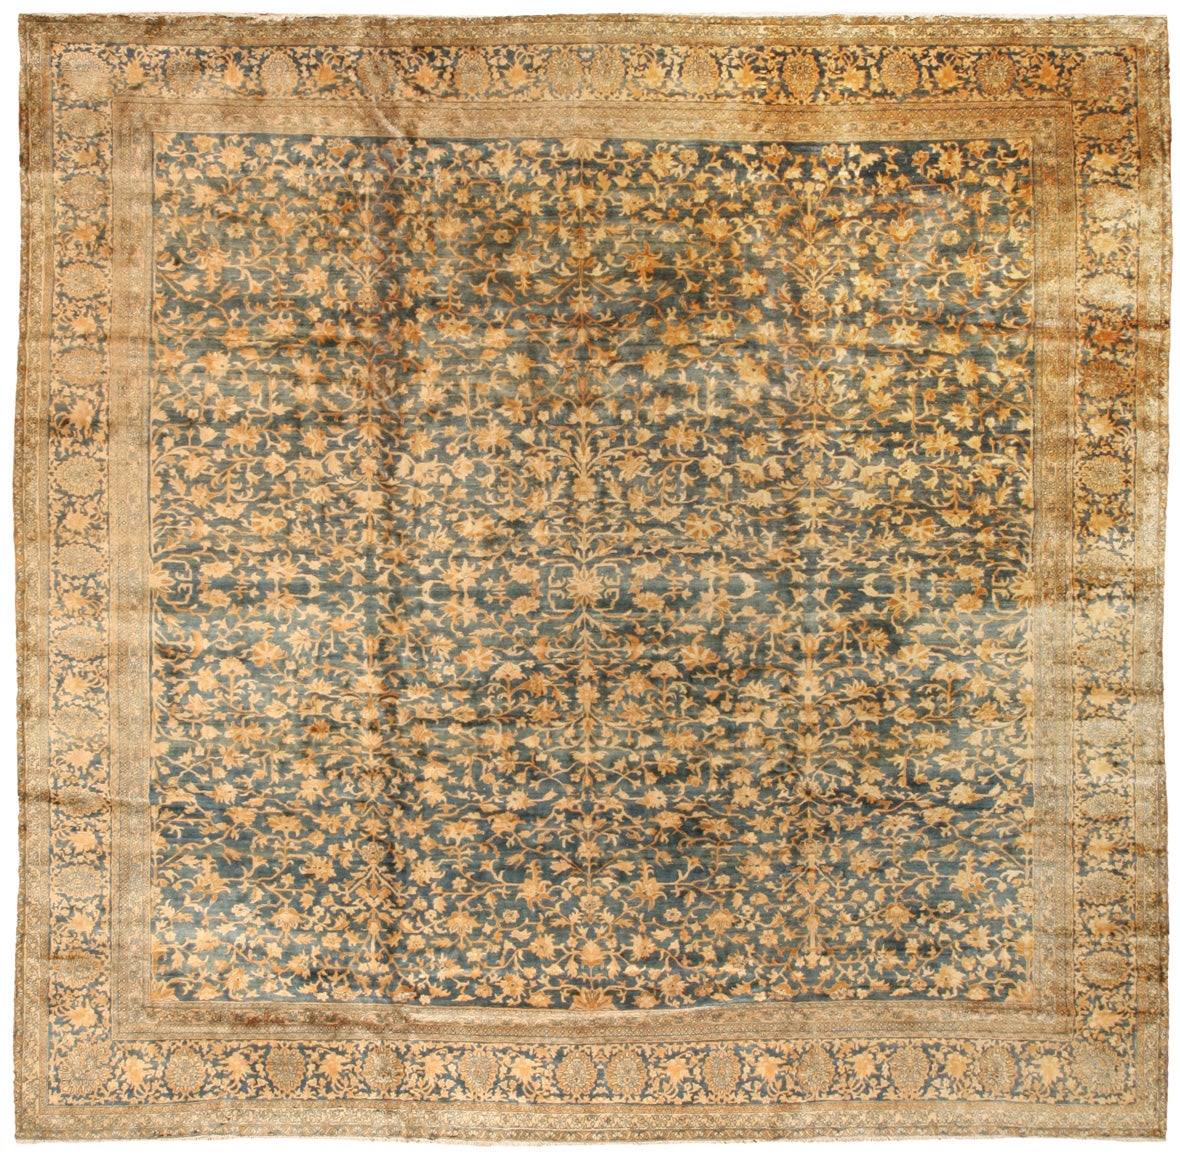 Antique 19th Century Indian Carpet For Sale